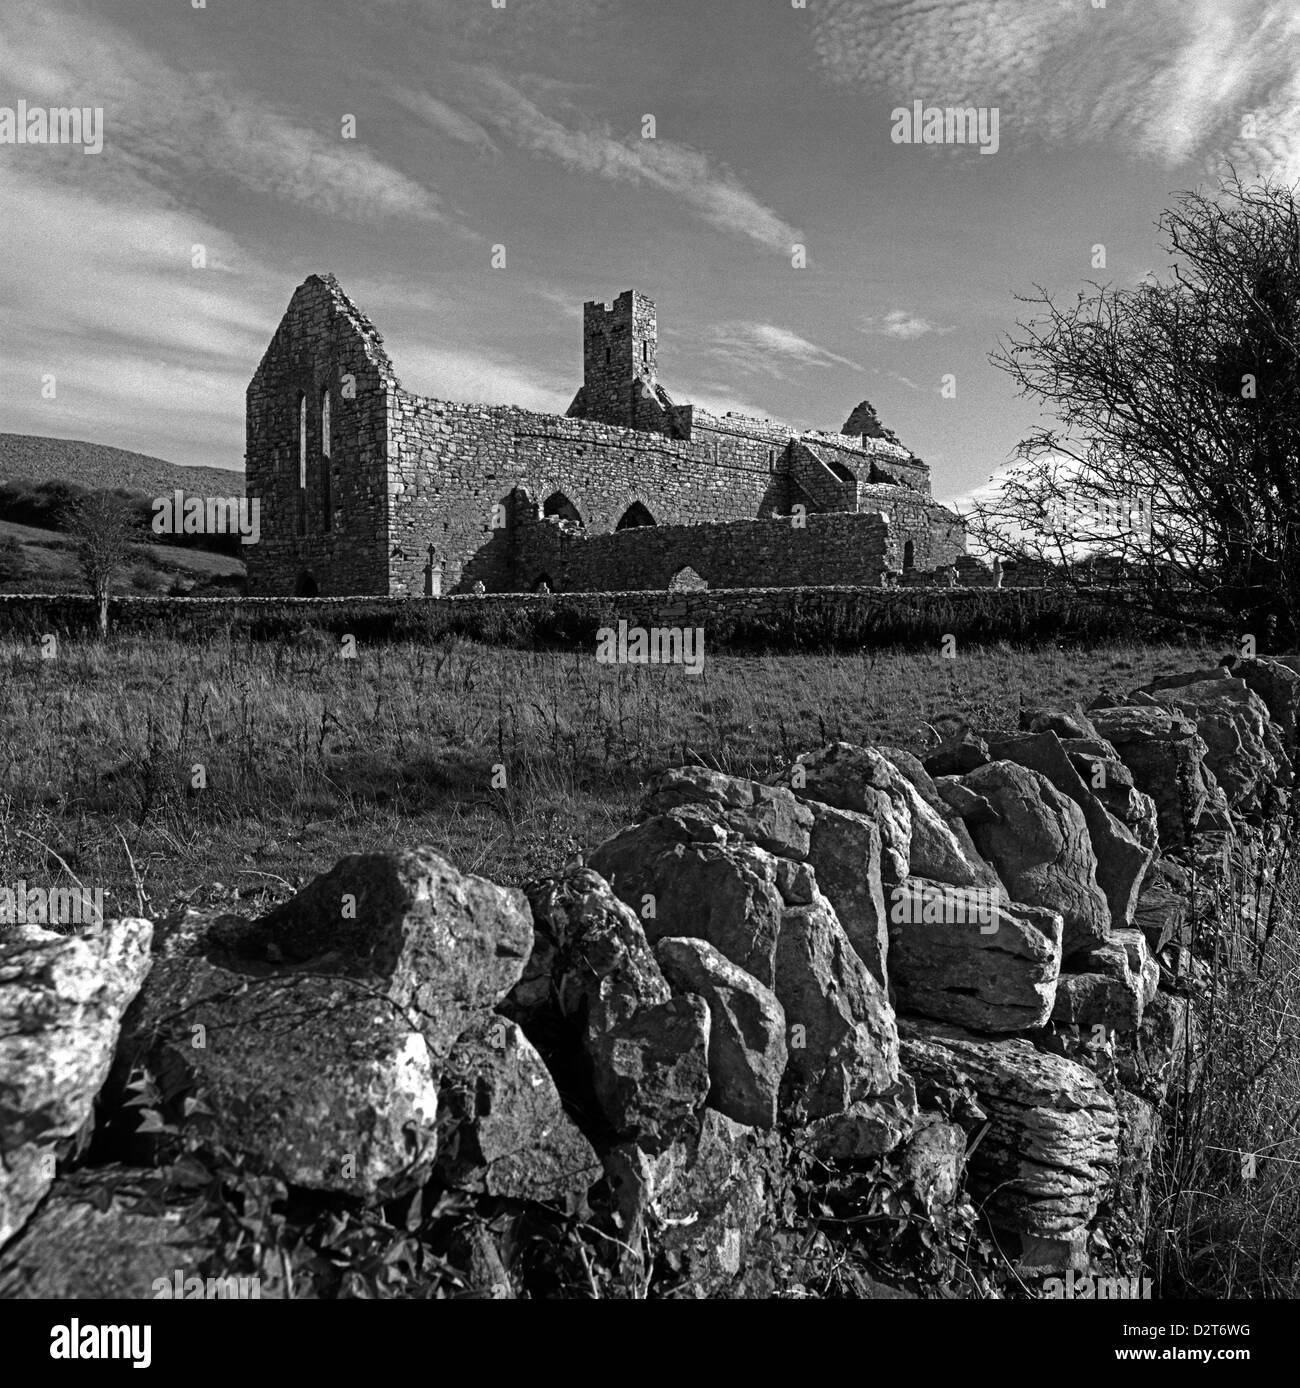 Corcomroe ireland Black and White Stock Photos & Images - Alamy